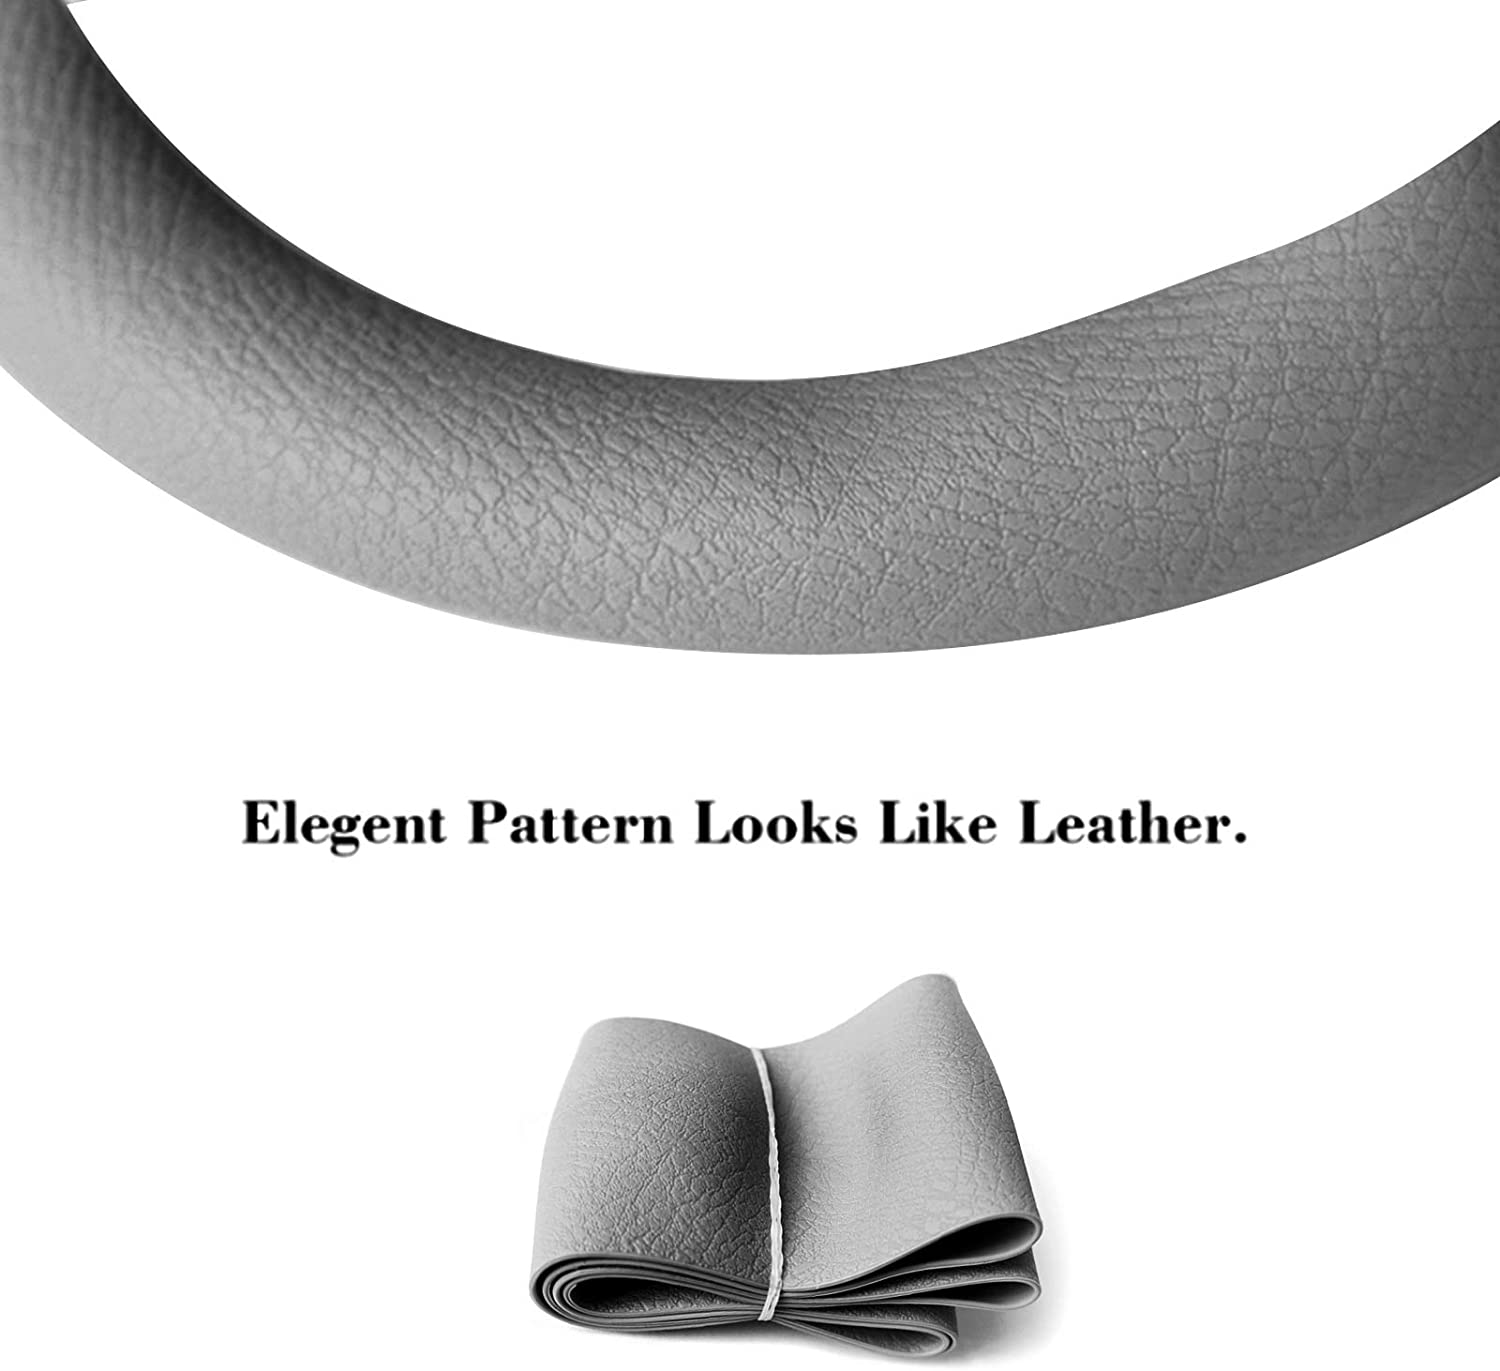 Gm Auto Stuurhoes, universele 15-16 Inch Zachte Siliconen Antislip Geurloos Elastische Leather Patroon Auto Velg Decoratie